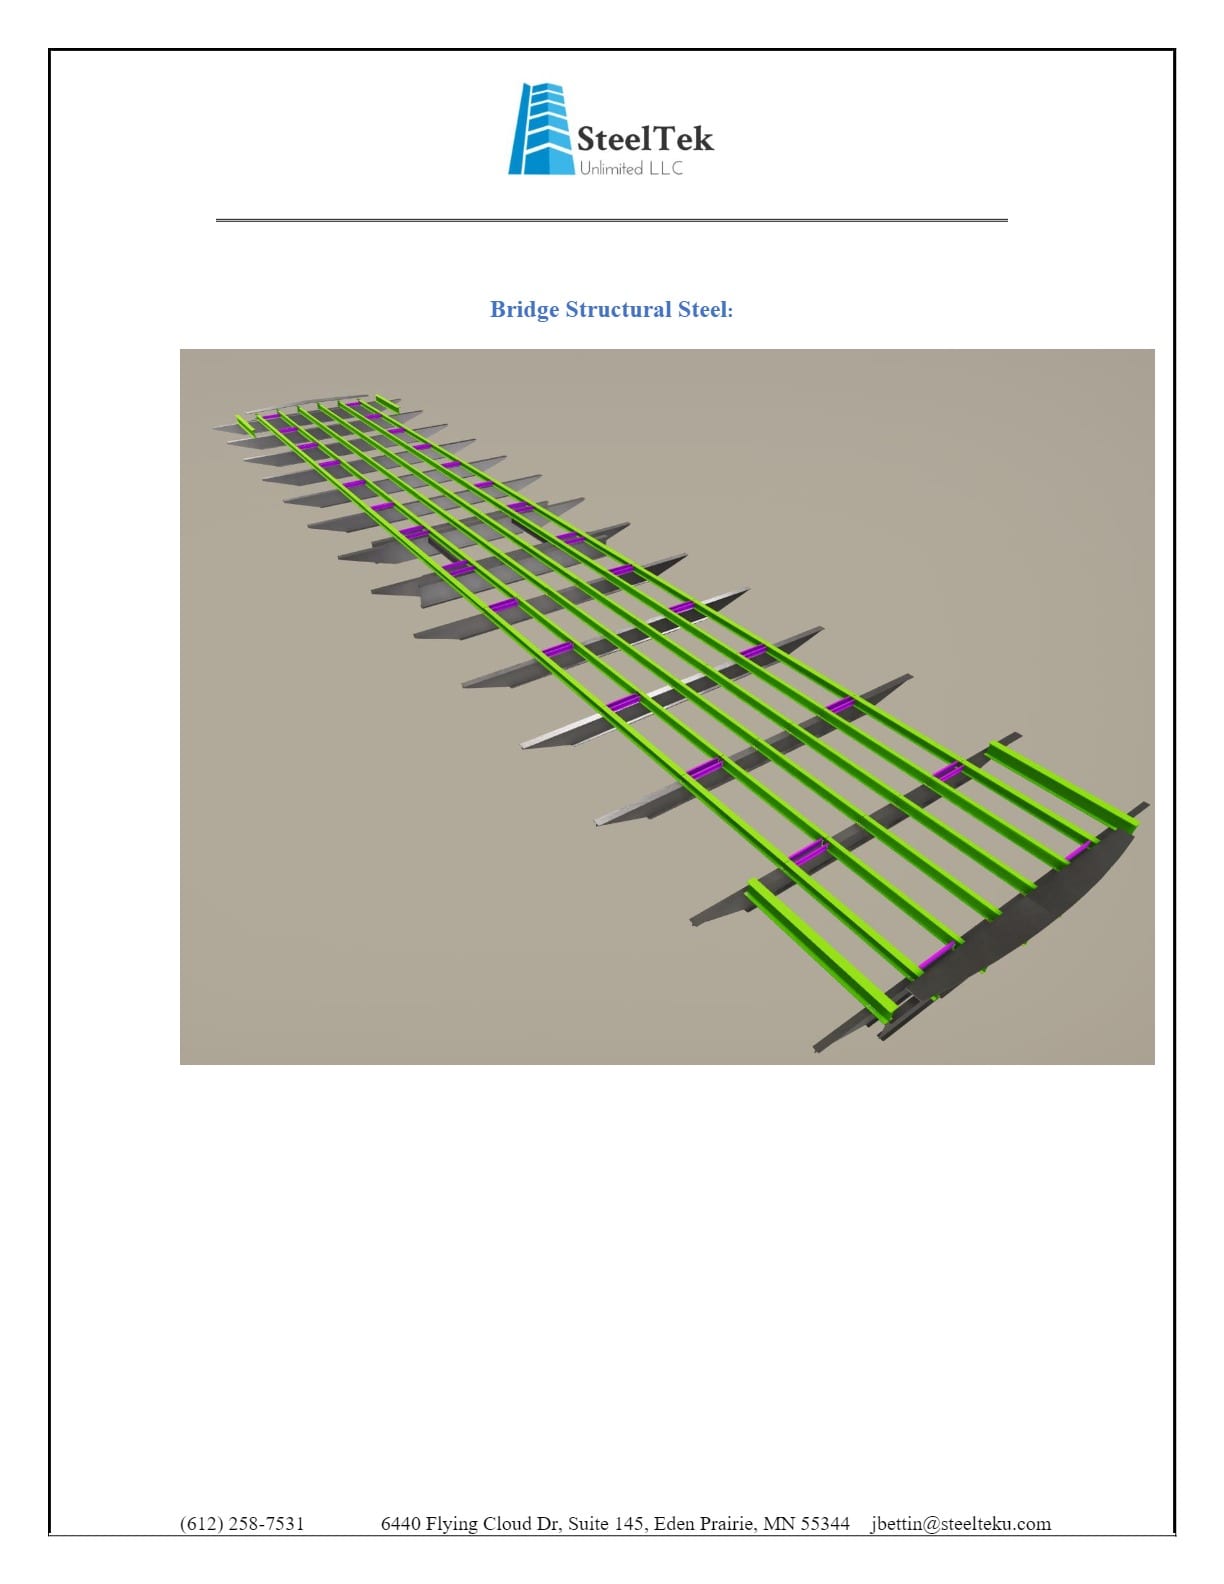 Steel Tek Unlimited 2021 AISC Brochure — Bridge Structural Steel